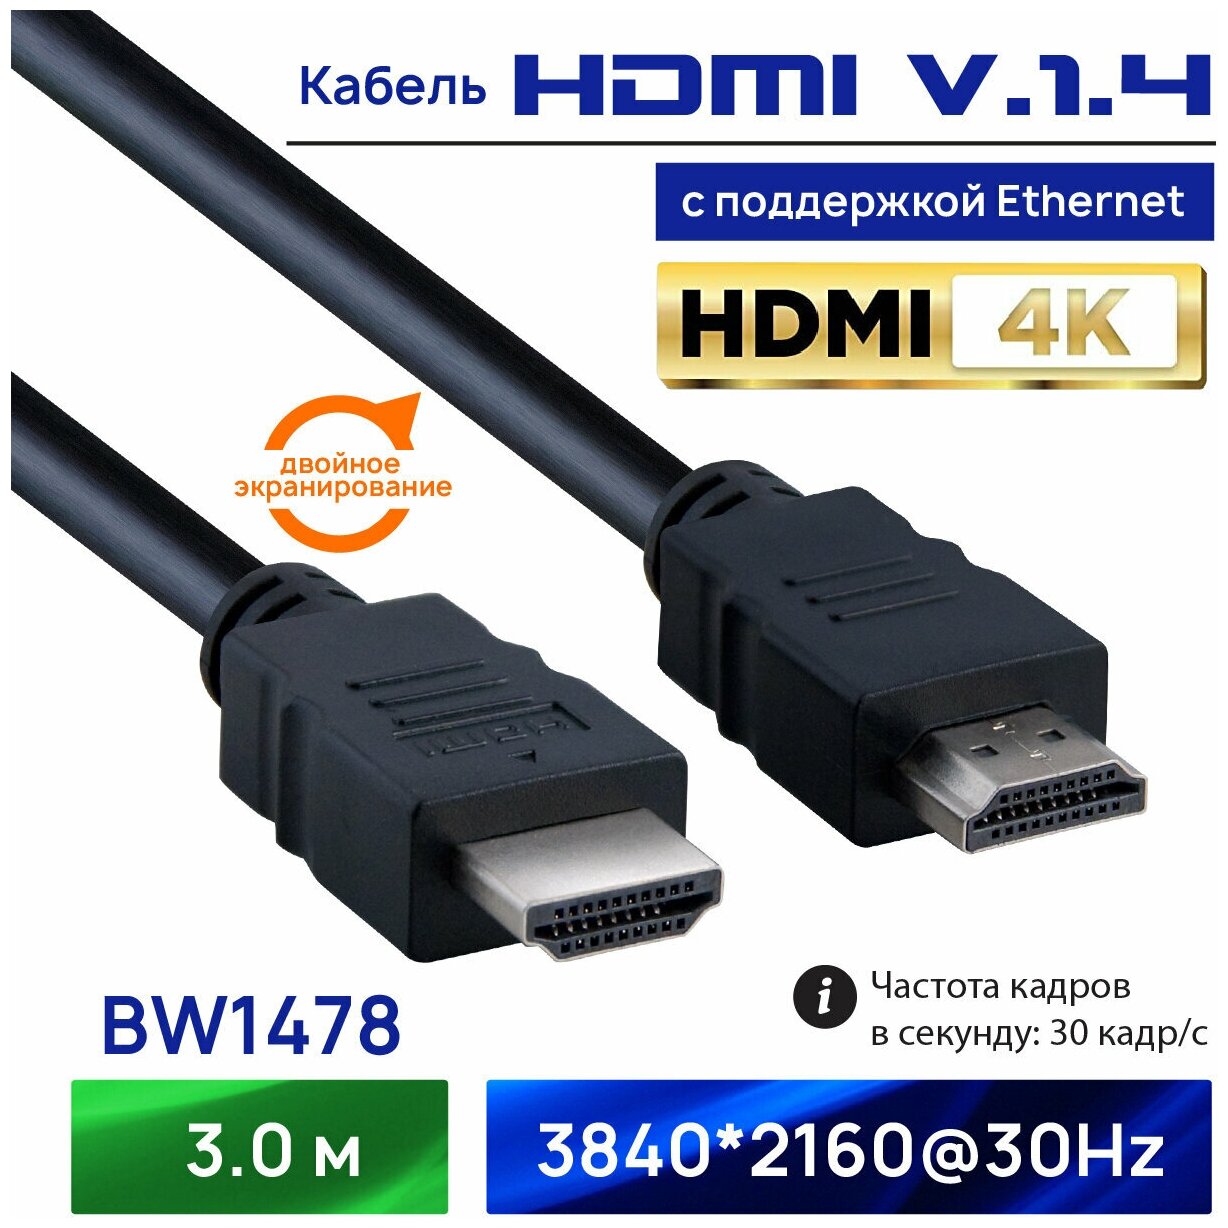 HDMI Кабель 1.4 4K, Belsis, длина 3 метра/ BW1478